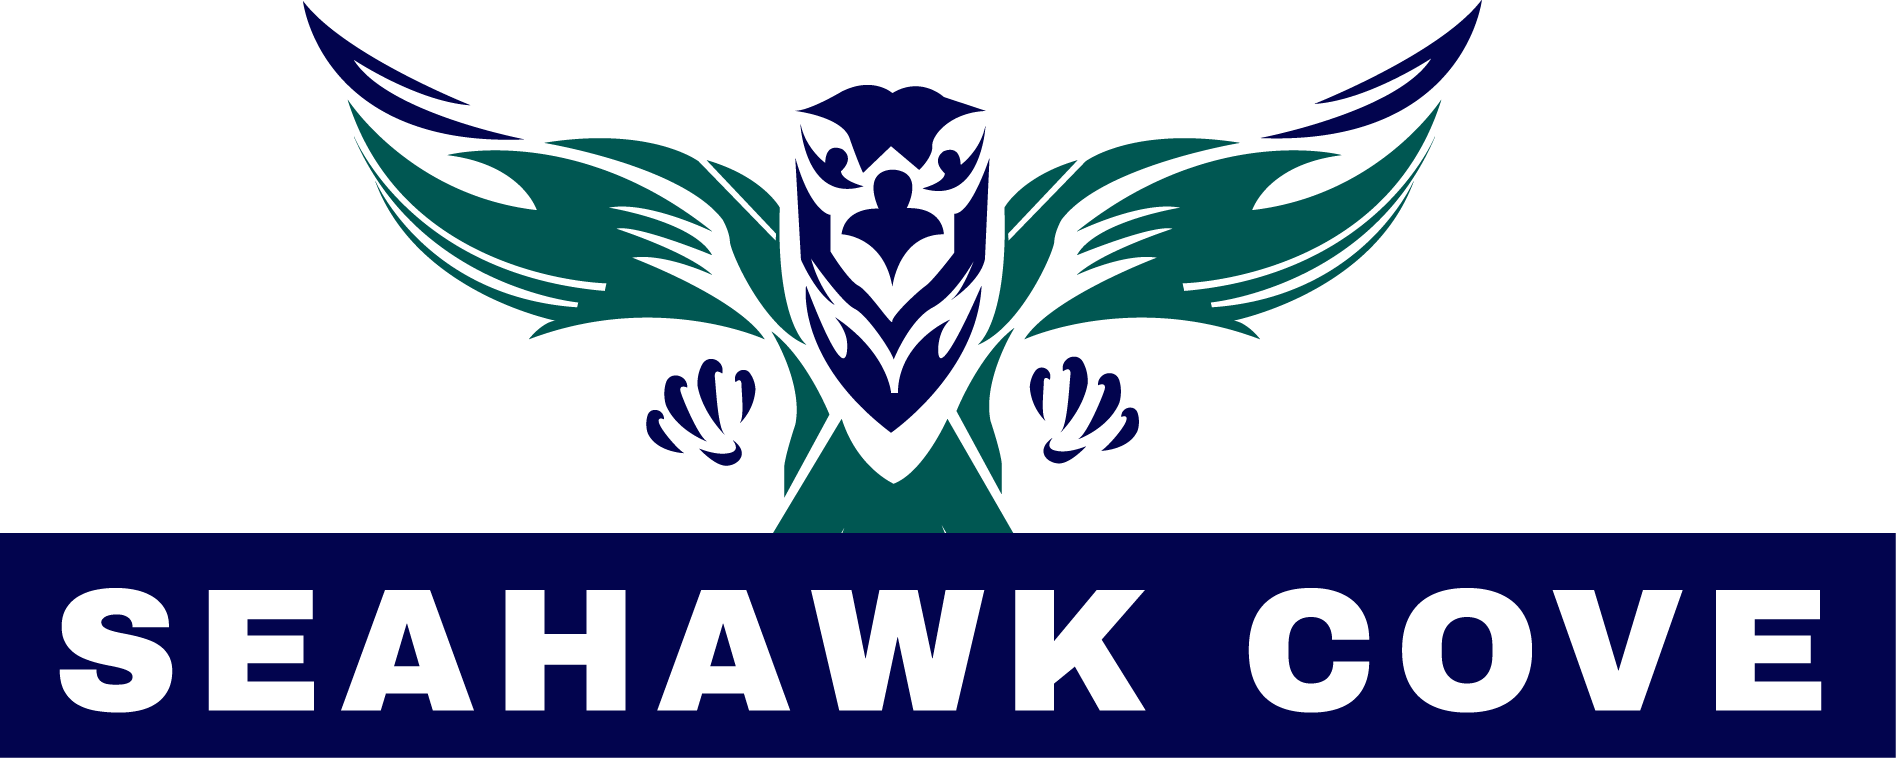 Seahawk Cove Logo